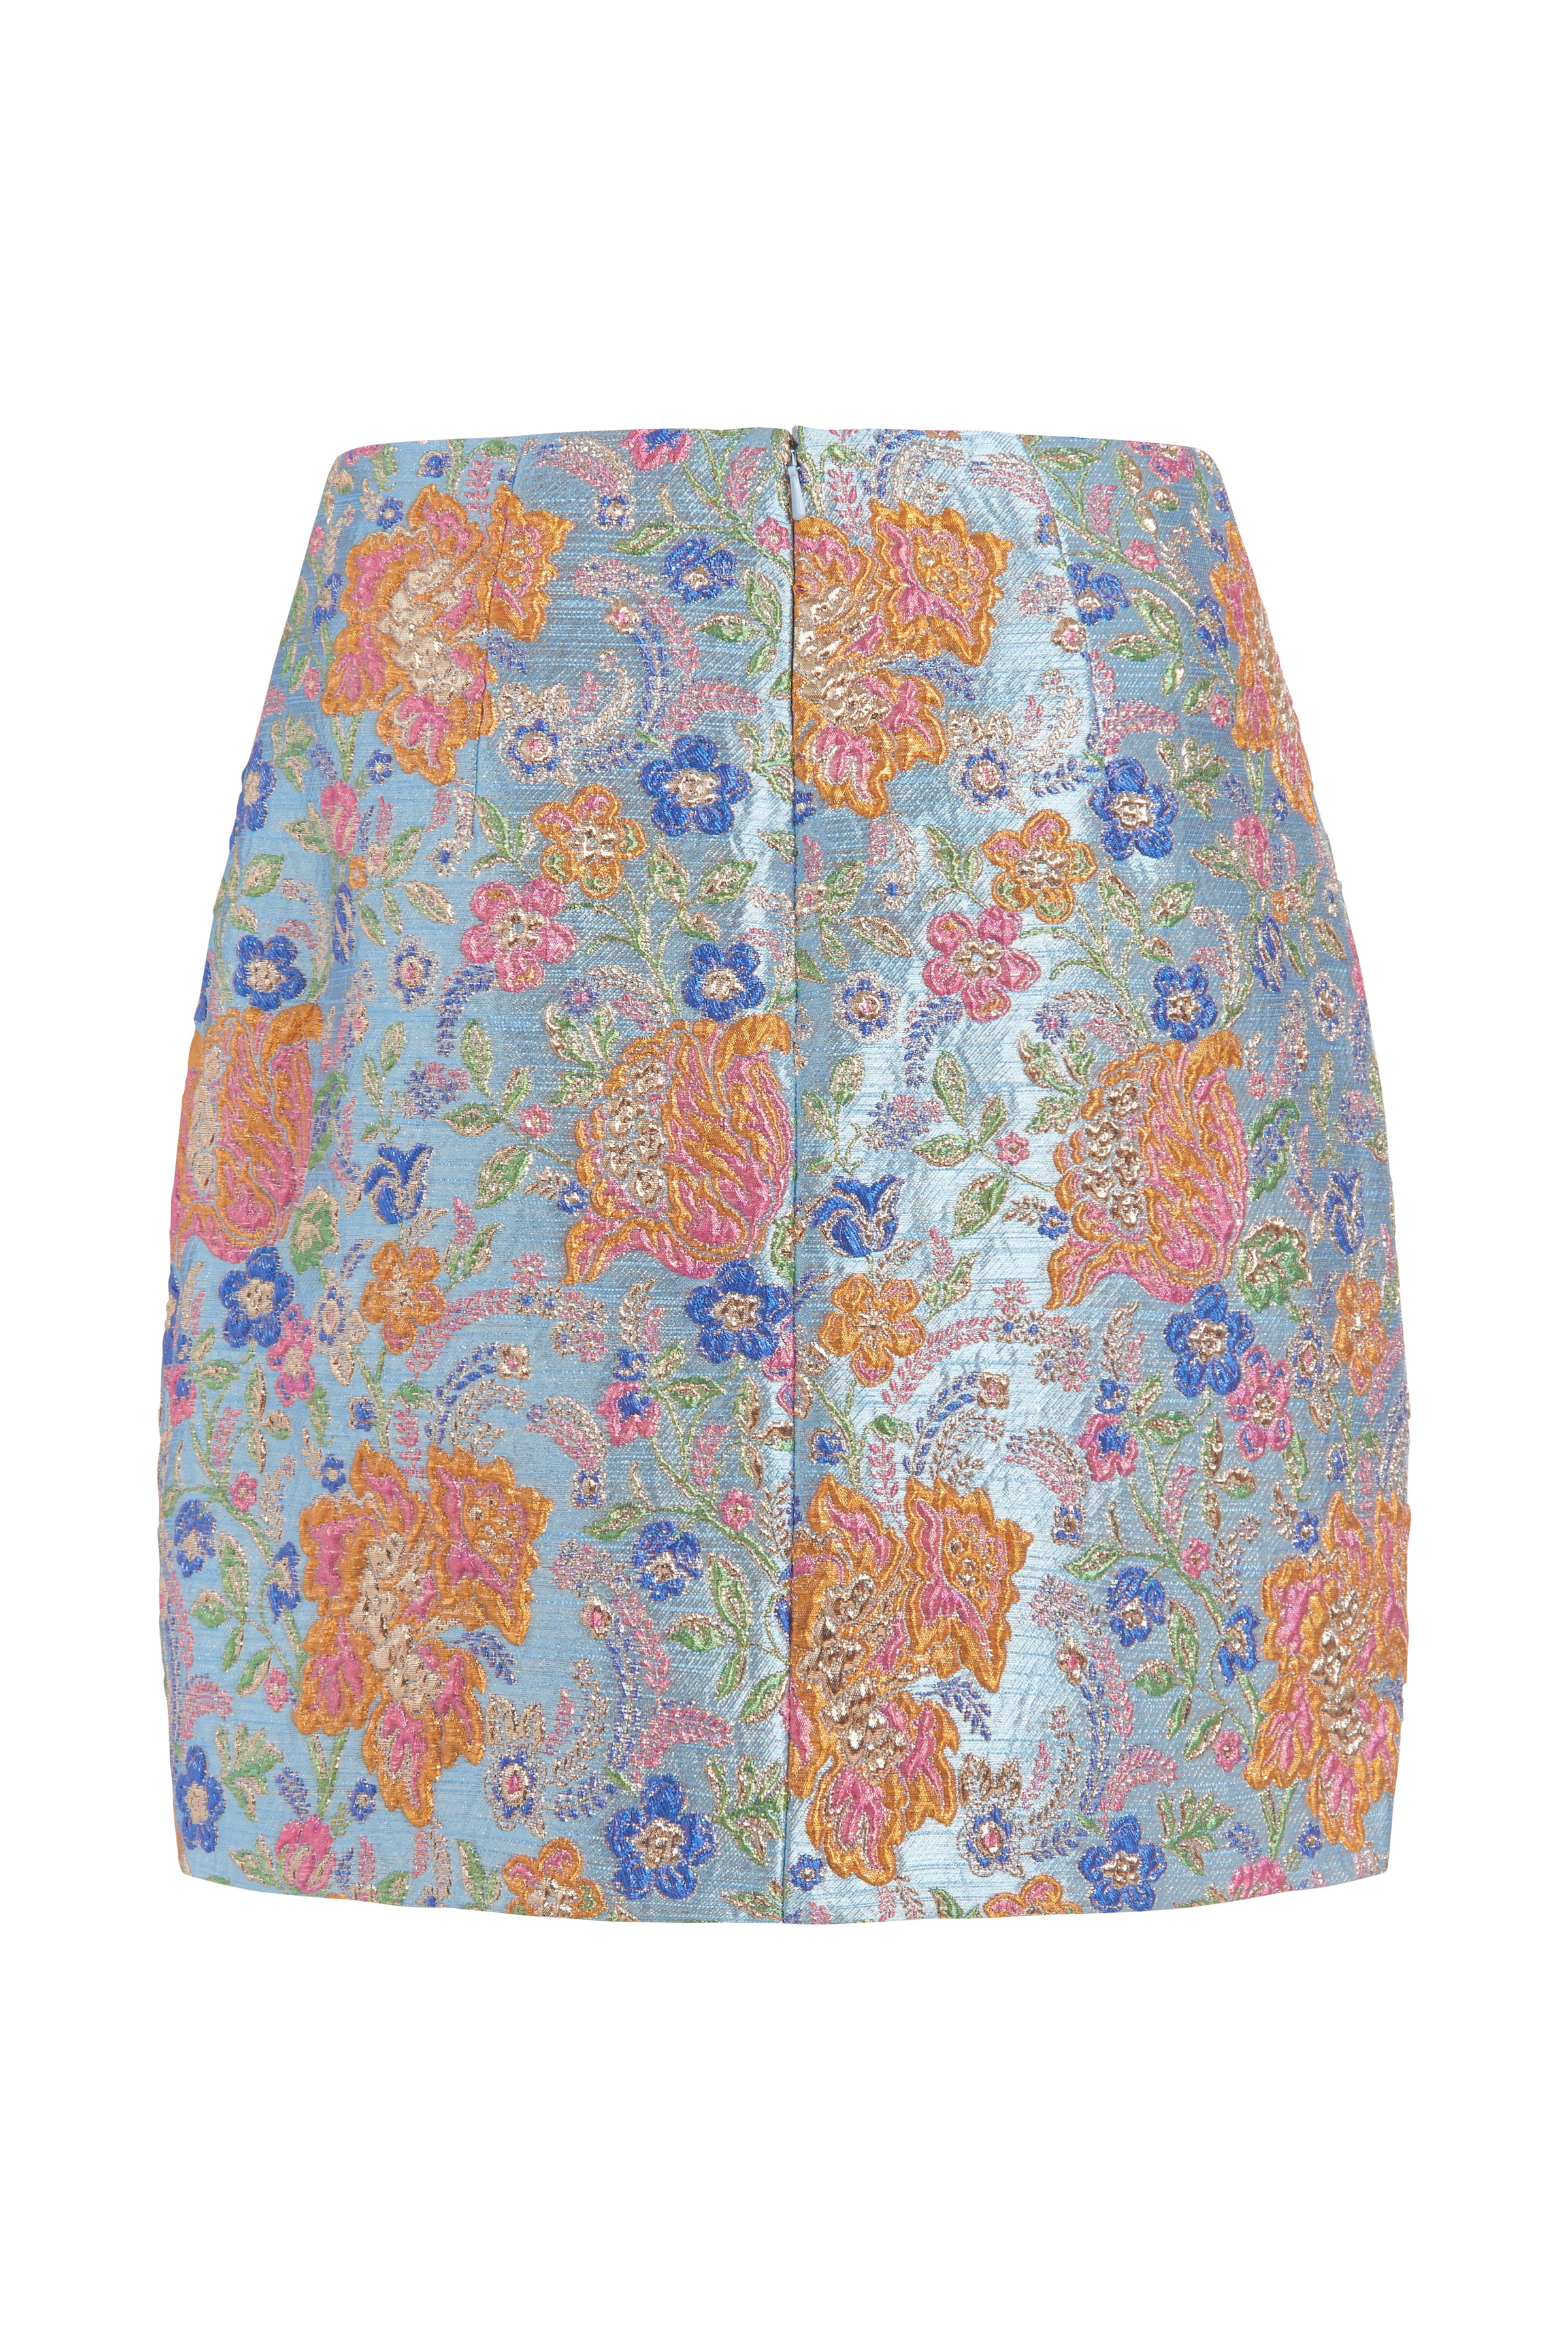 Linette Metallic Floral Brocade Mini Skirt